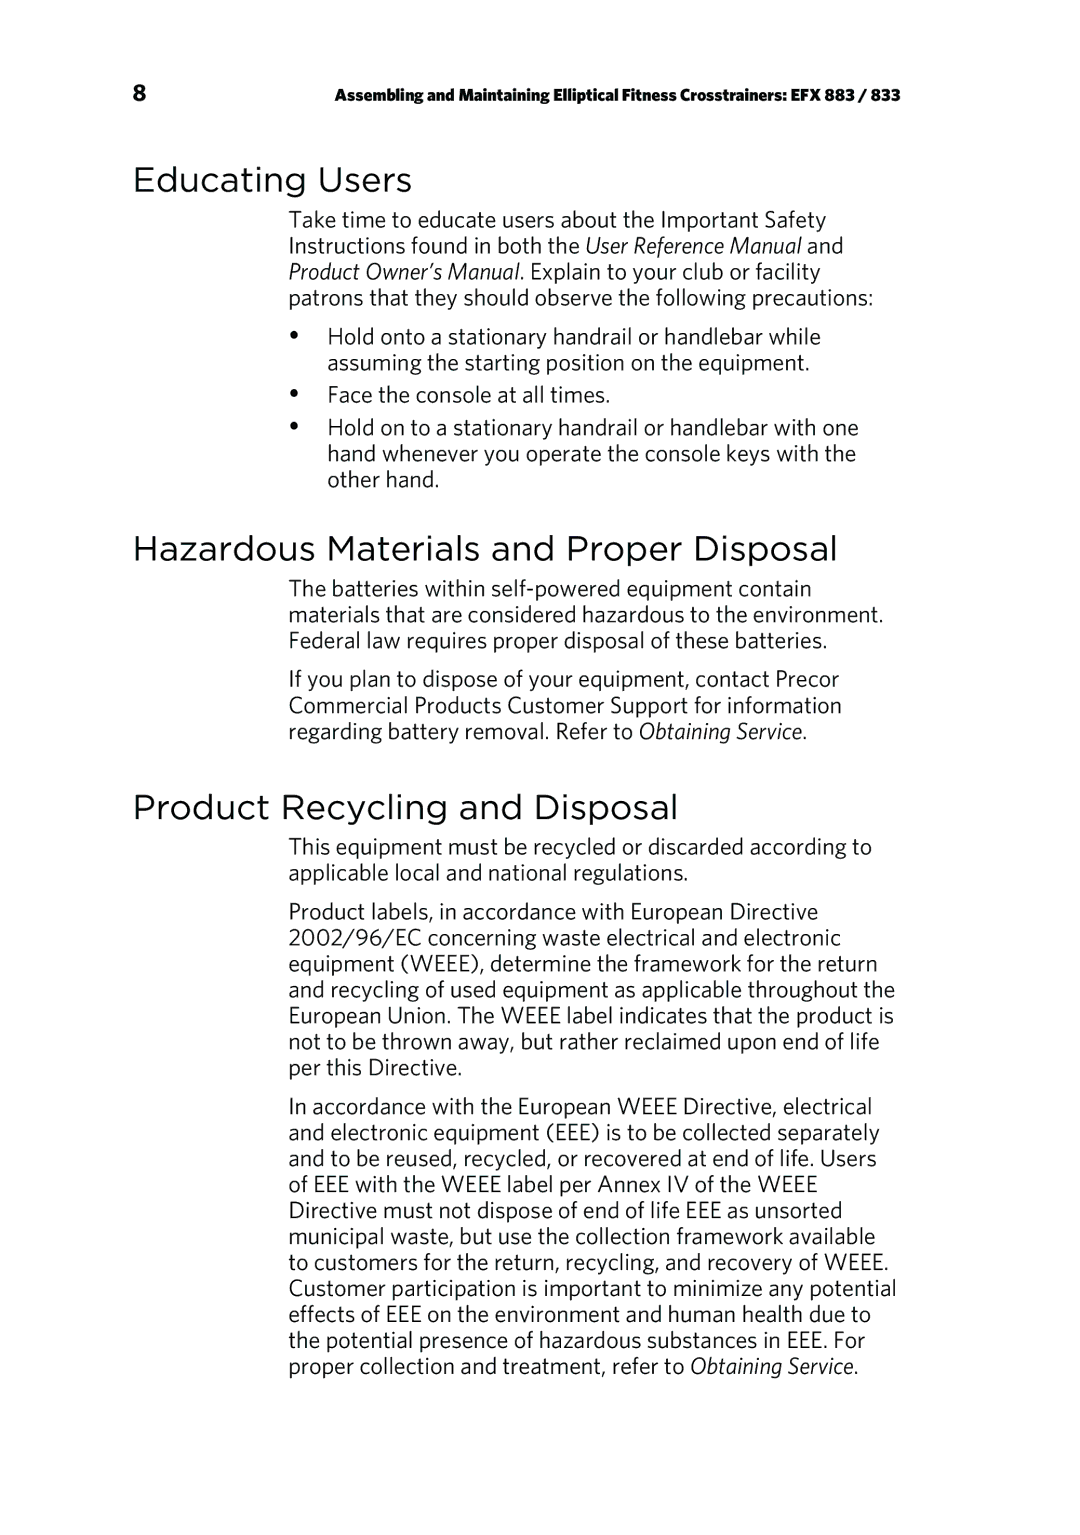 Precor P80 manual Educating Users, Hazardous Materials and Proper Disposal 